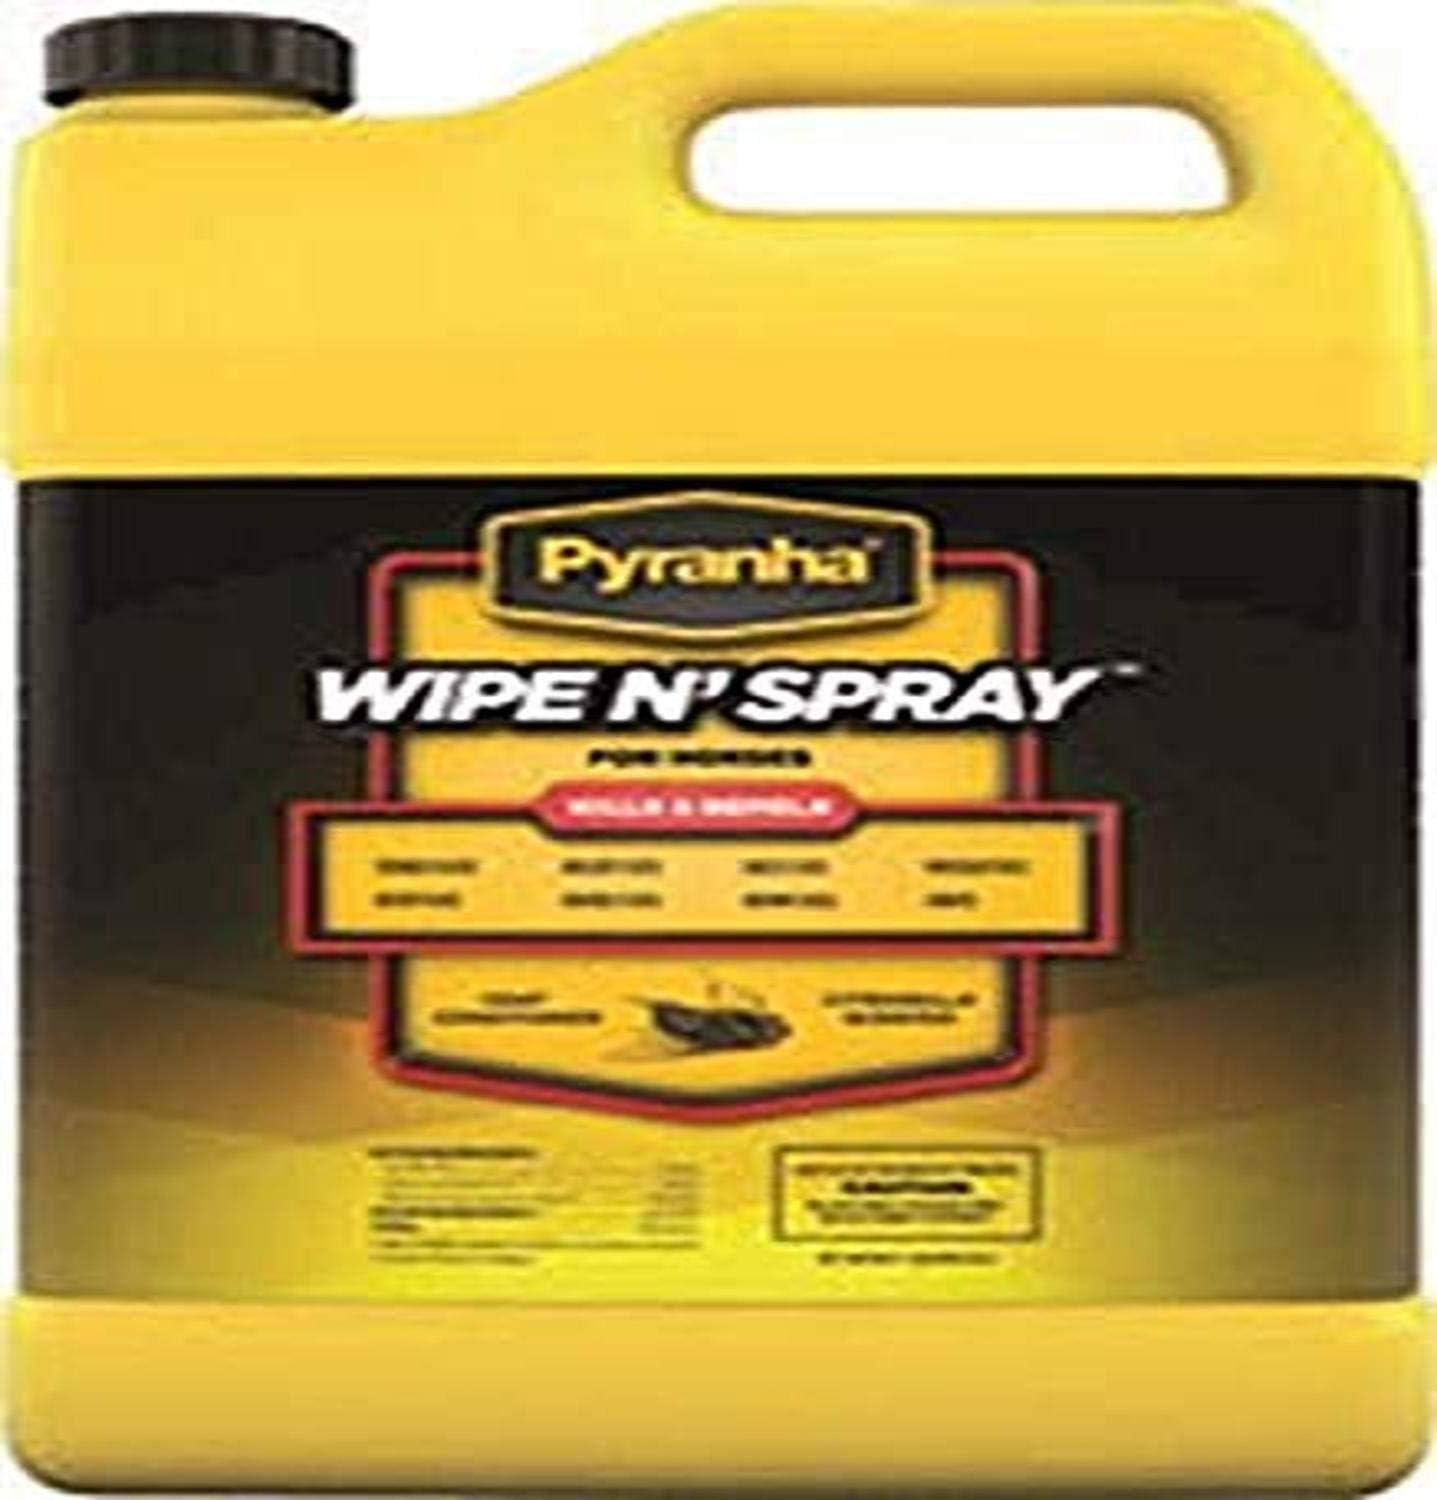 Pyranha 001GWIPEG 068022 Wipe N'Spray Fly Protection [...]